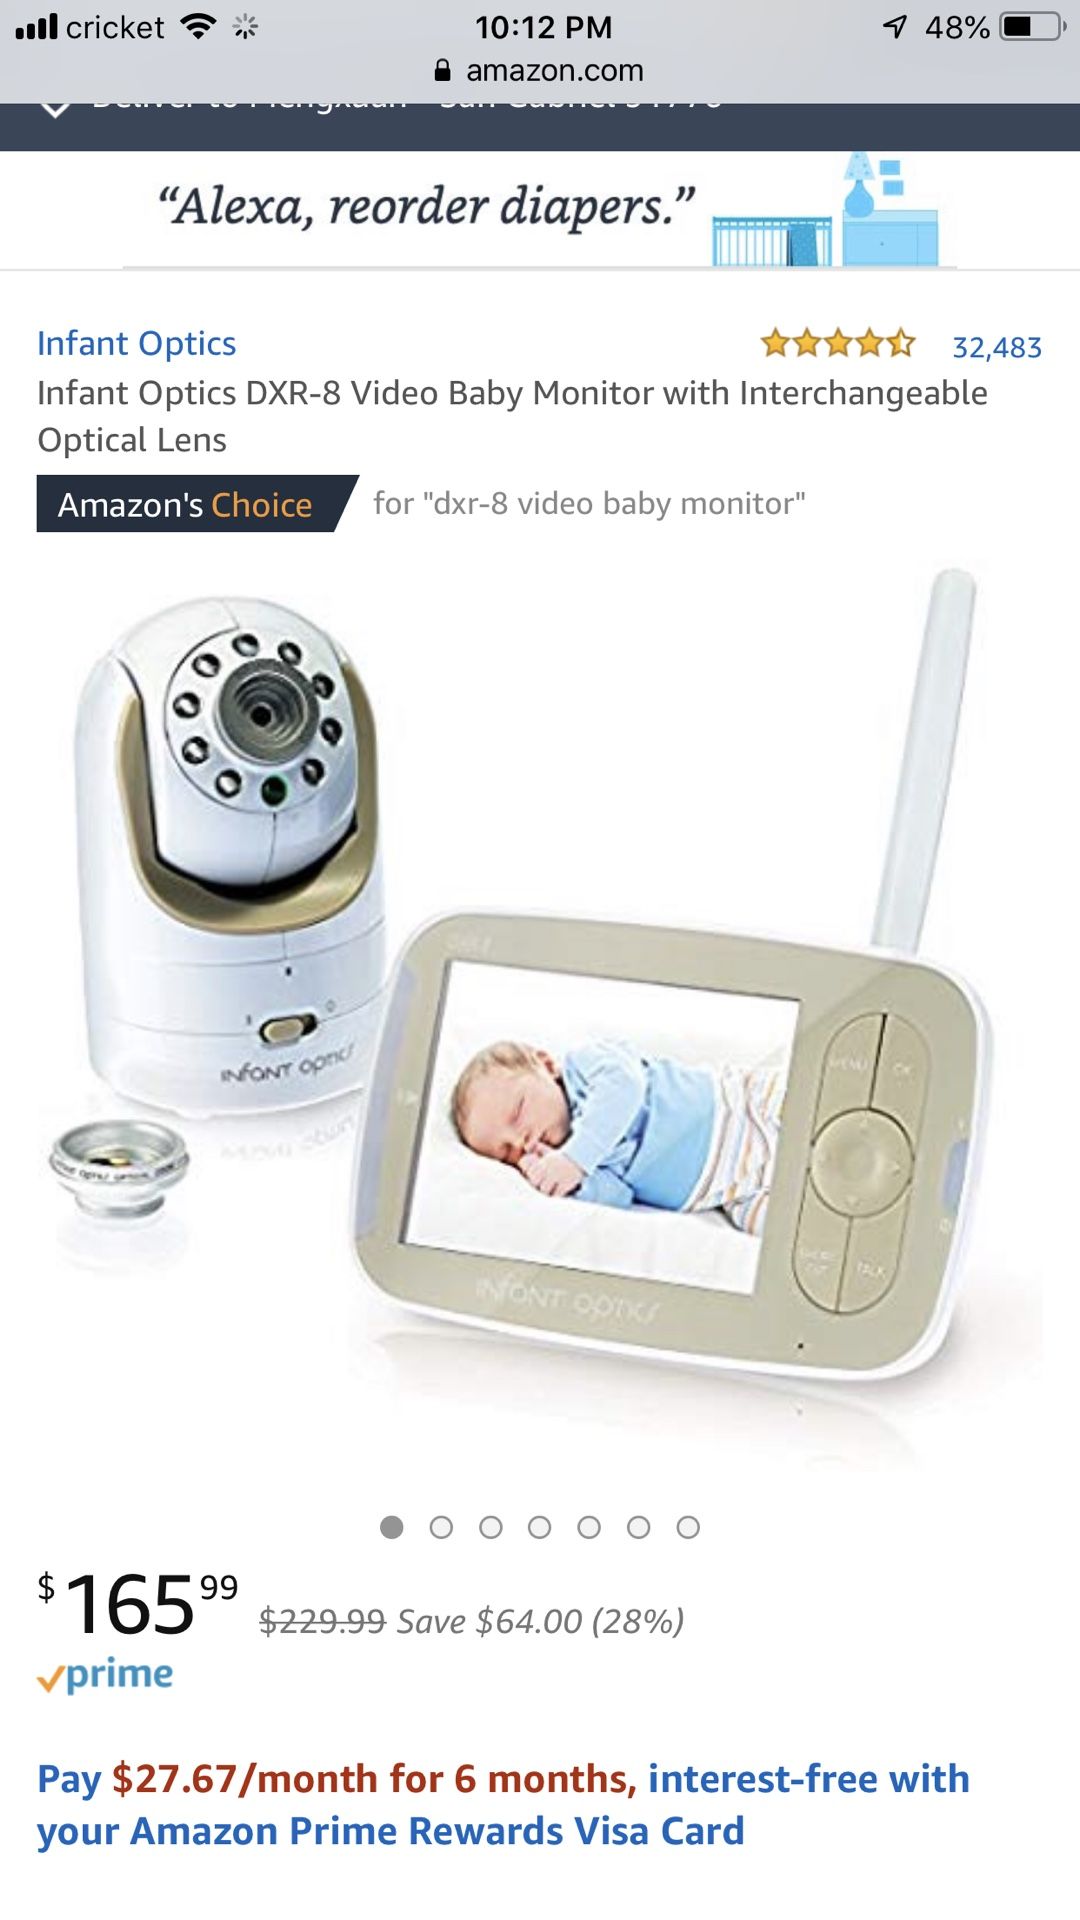 DXR-8 infant optics two cameras plus one monitor